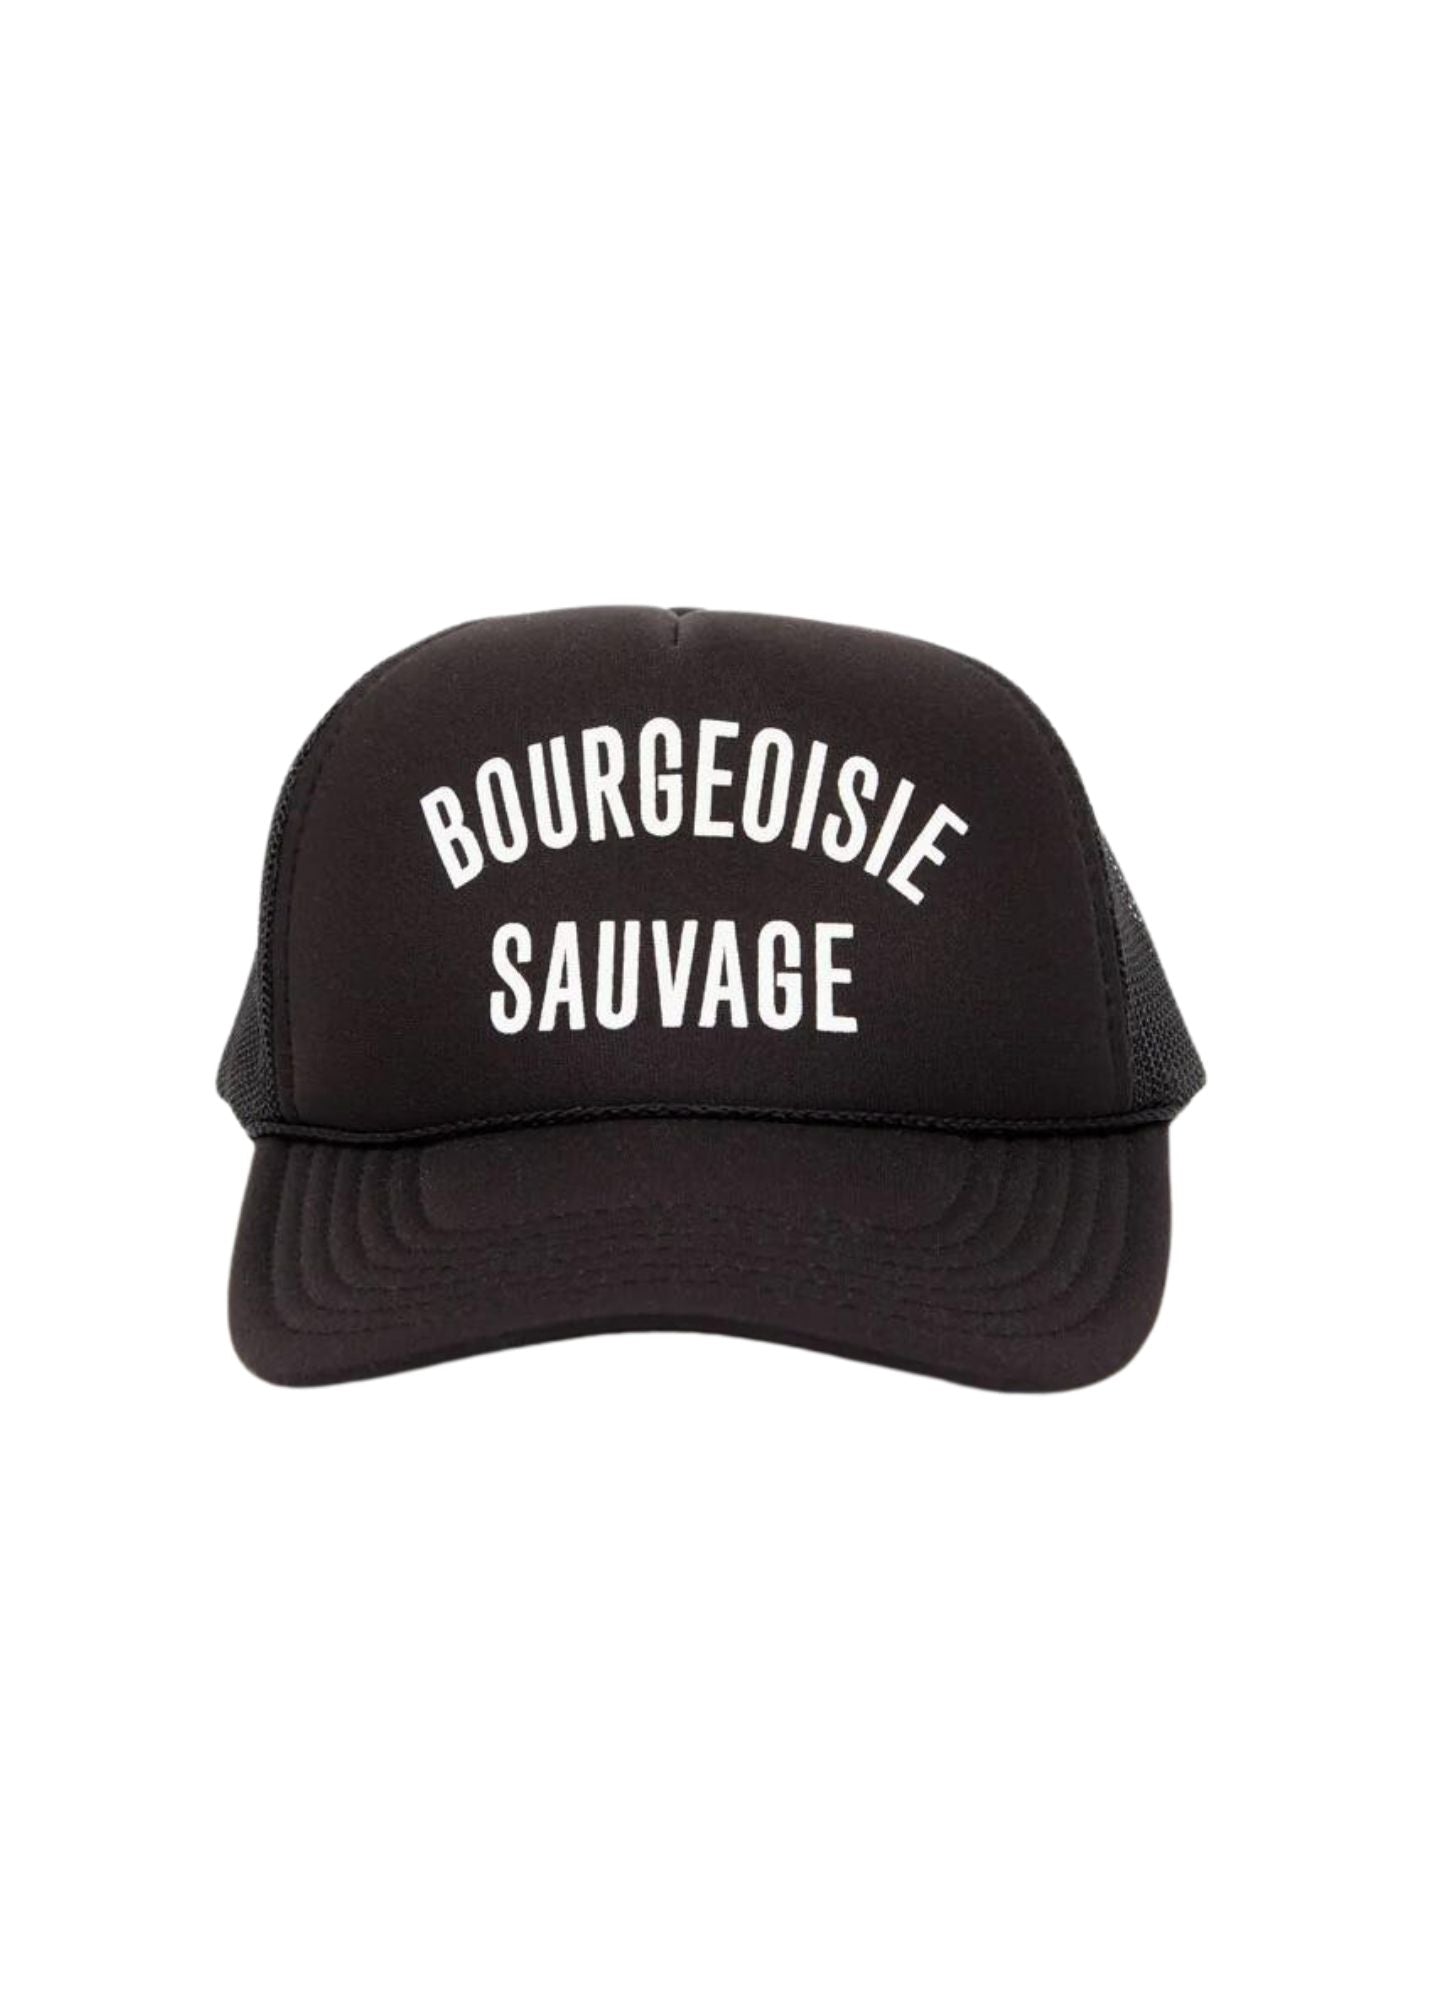 CLARE V. BOURGEOISIE SAUVAGE TRUCKER HAT